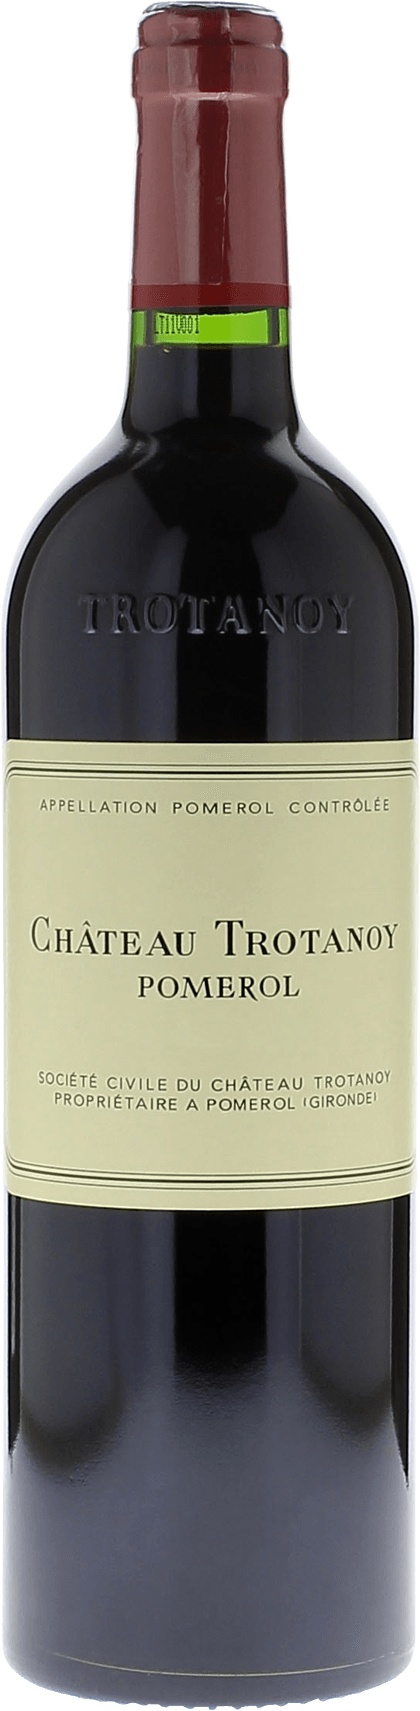 Trotanoy 1961  Pomerol, Bordeaux rouge